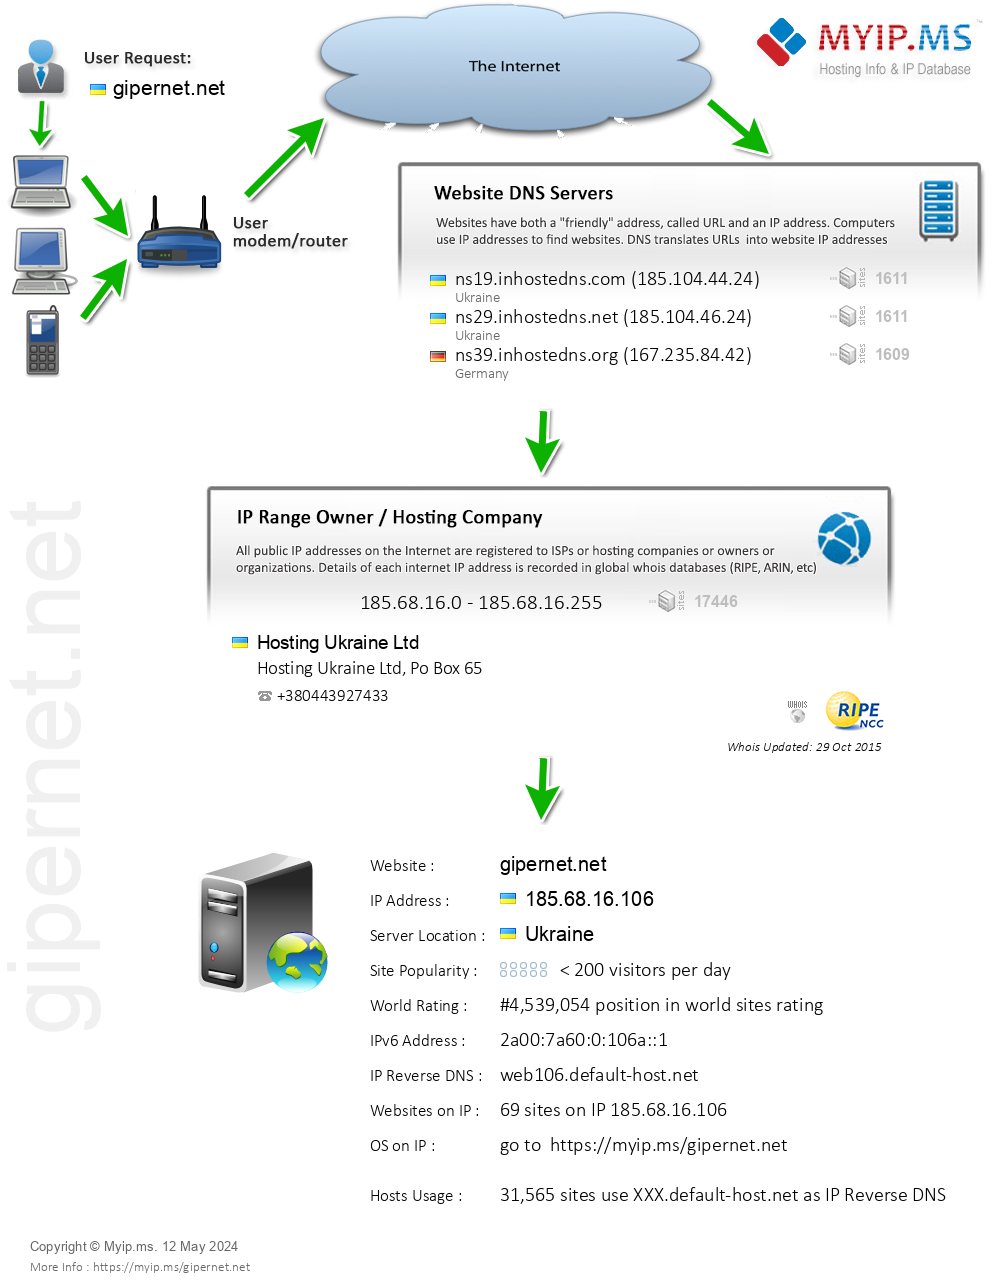 Gipernet.net - Website Hosting Visual IP Diagram